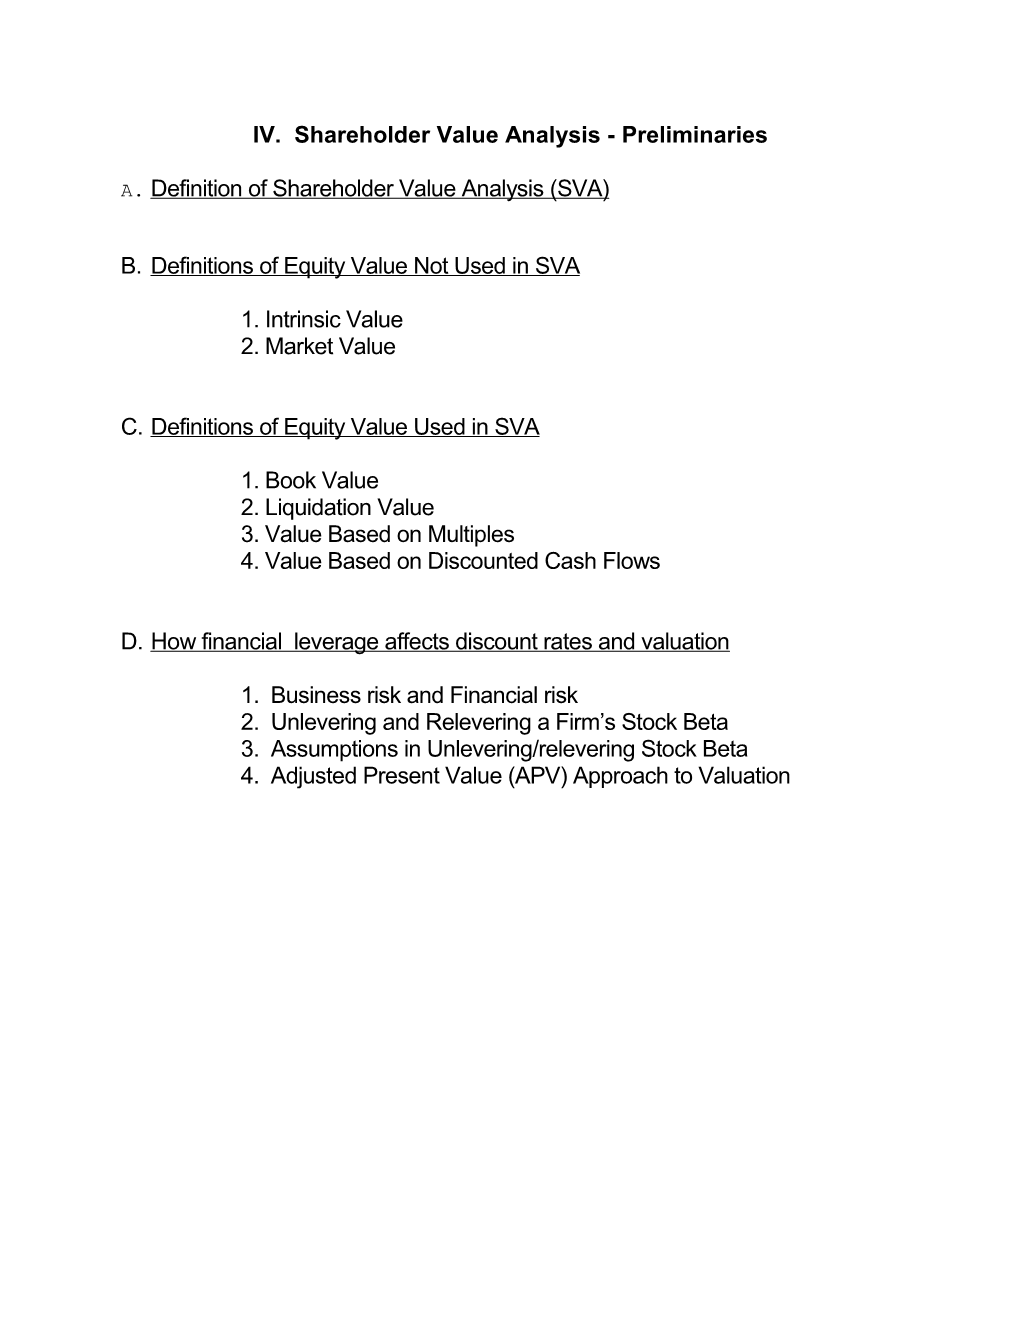 IV. Shareholder Value Analysis - Preliminaries